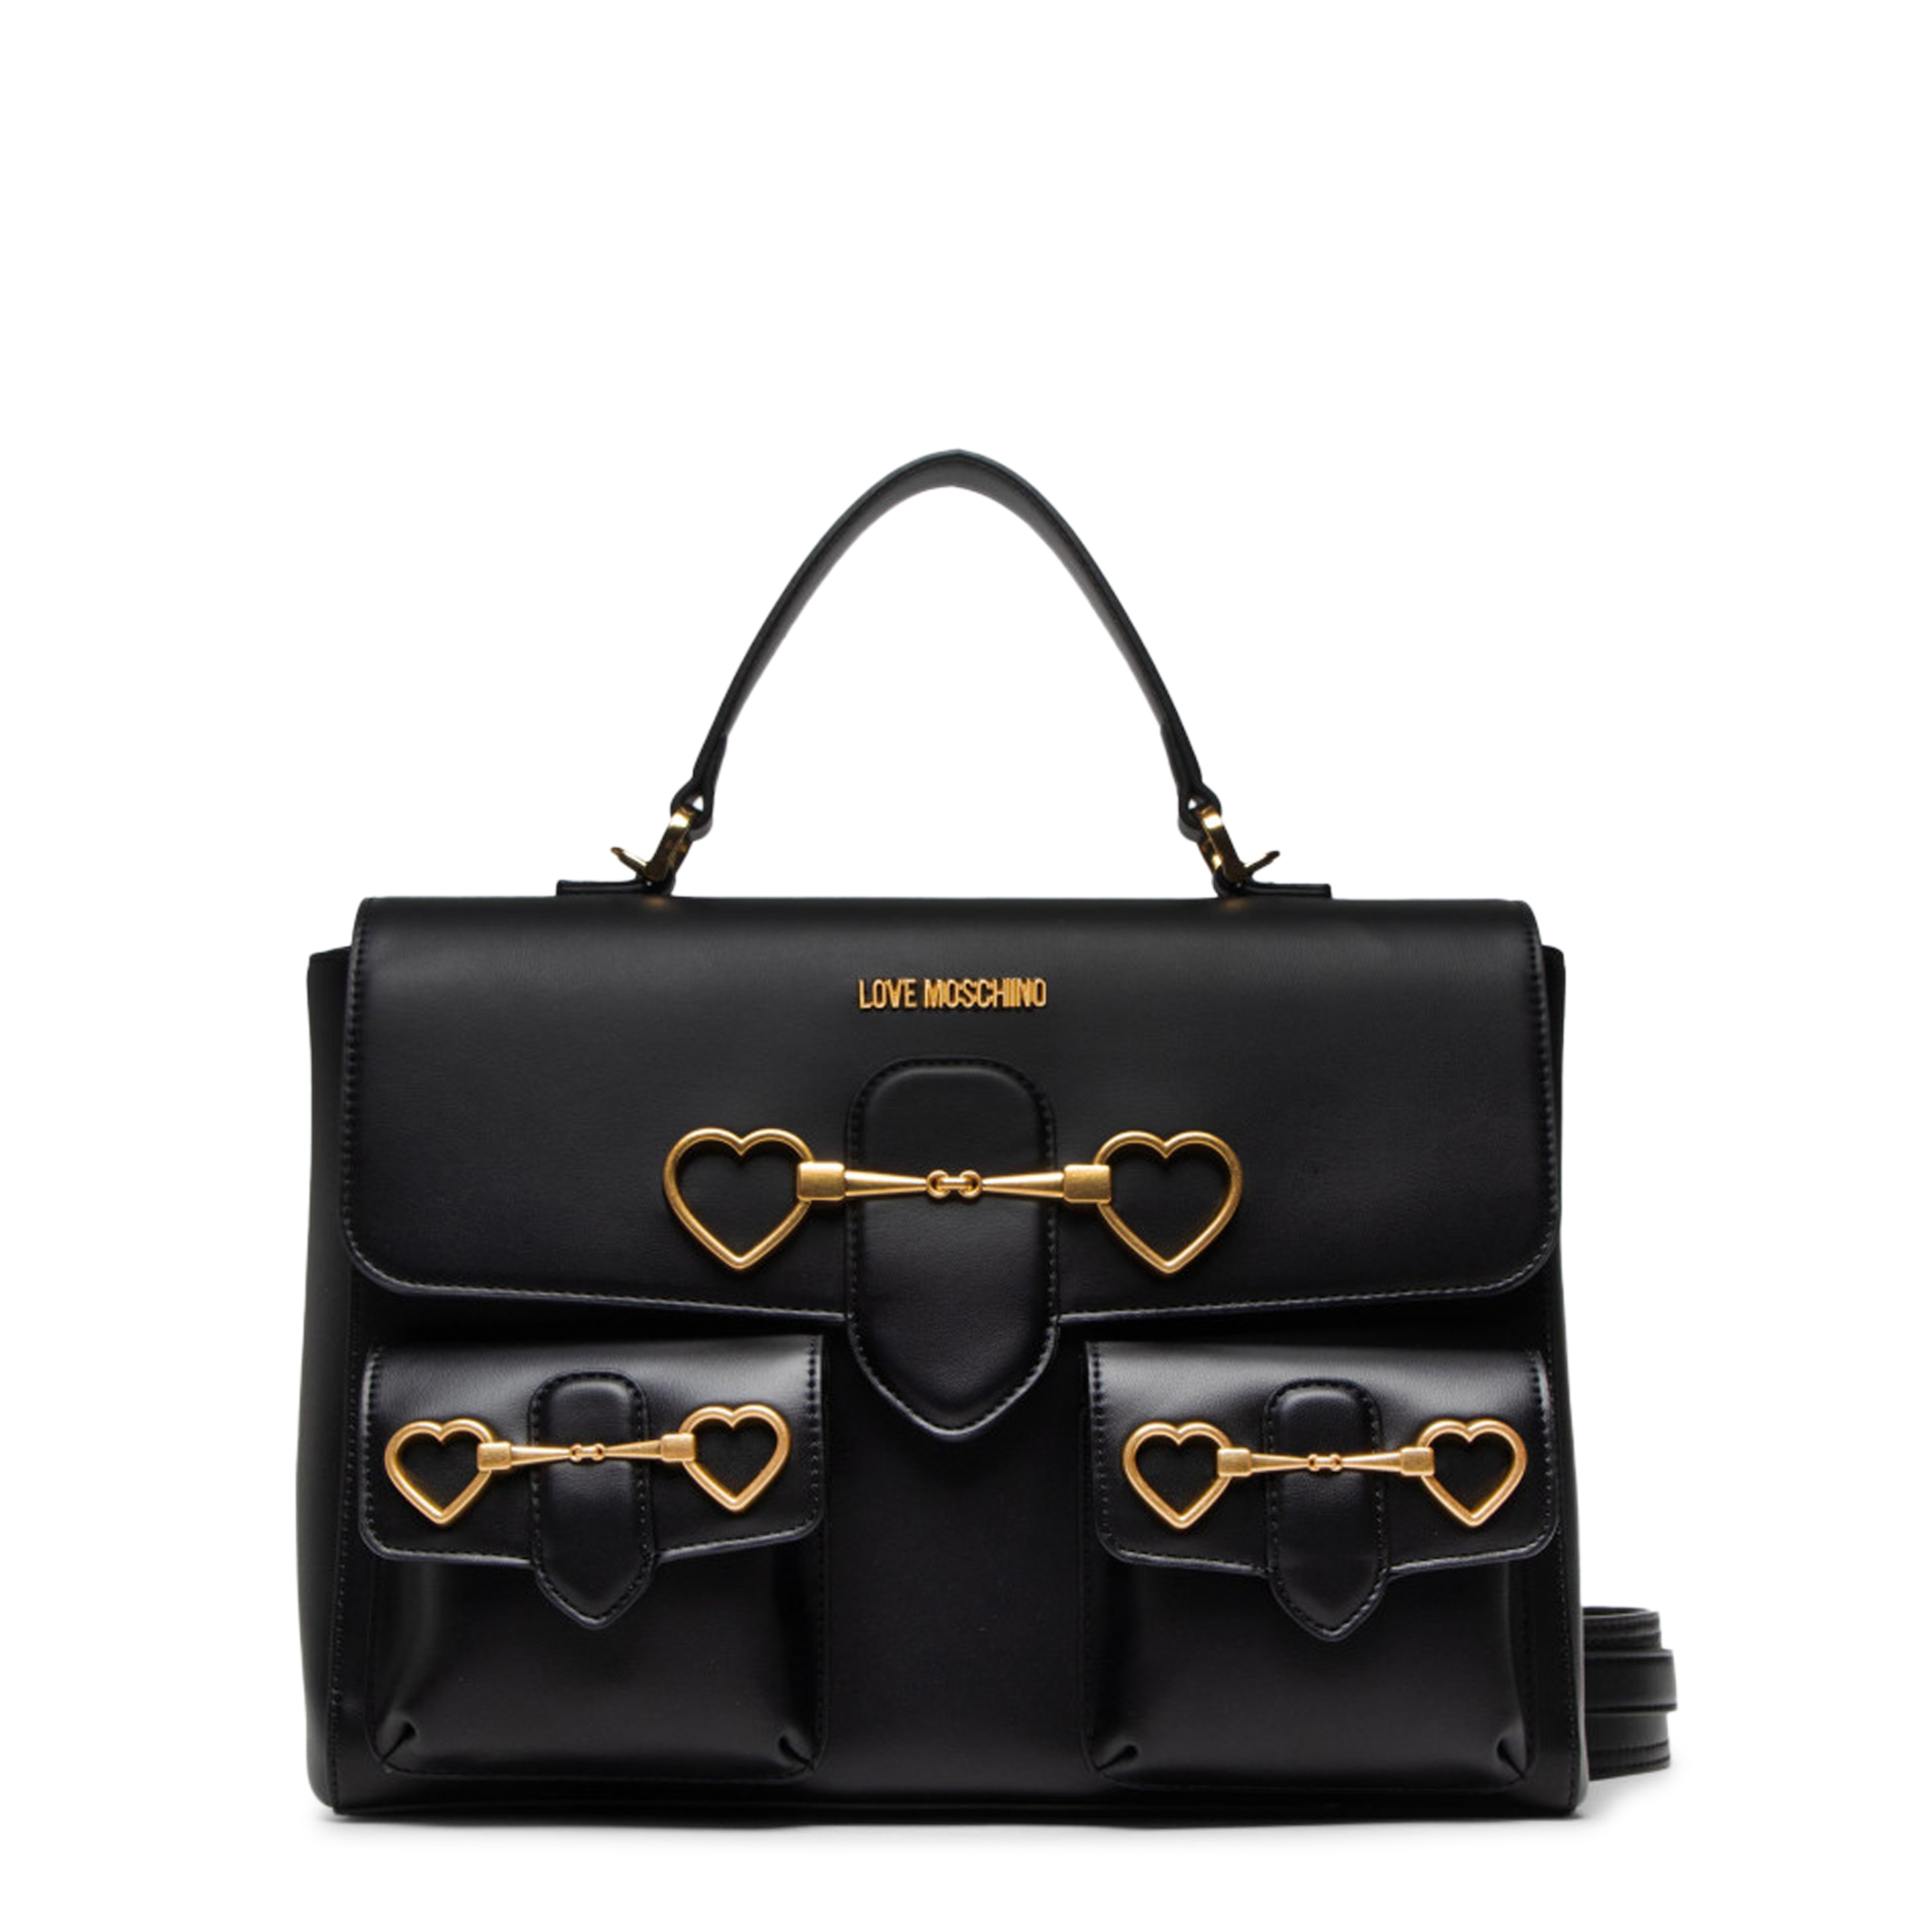 Love Moschino Black Handbags for Women - JC4076PP1ELC0